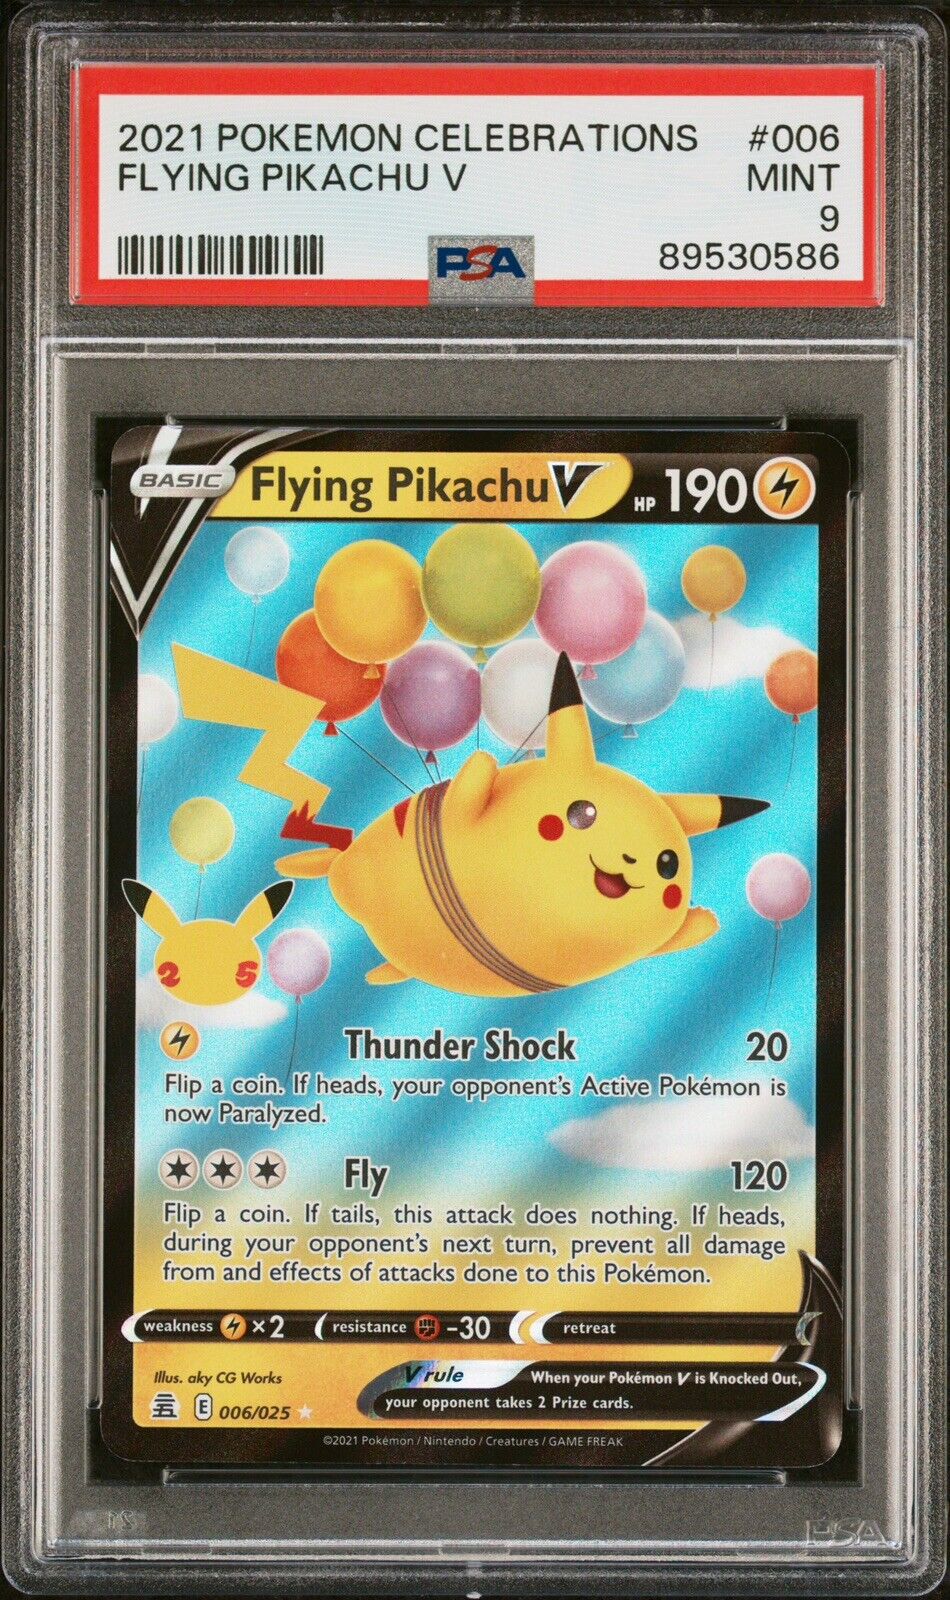 2021 Pokemon Celebrations #006 Flying Pikachu V PSA 9 MINT